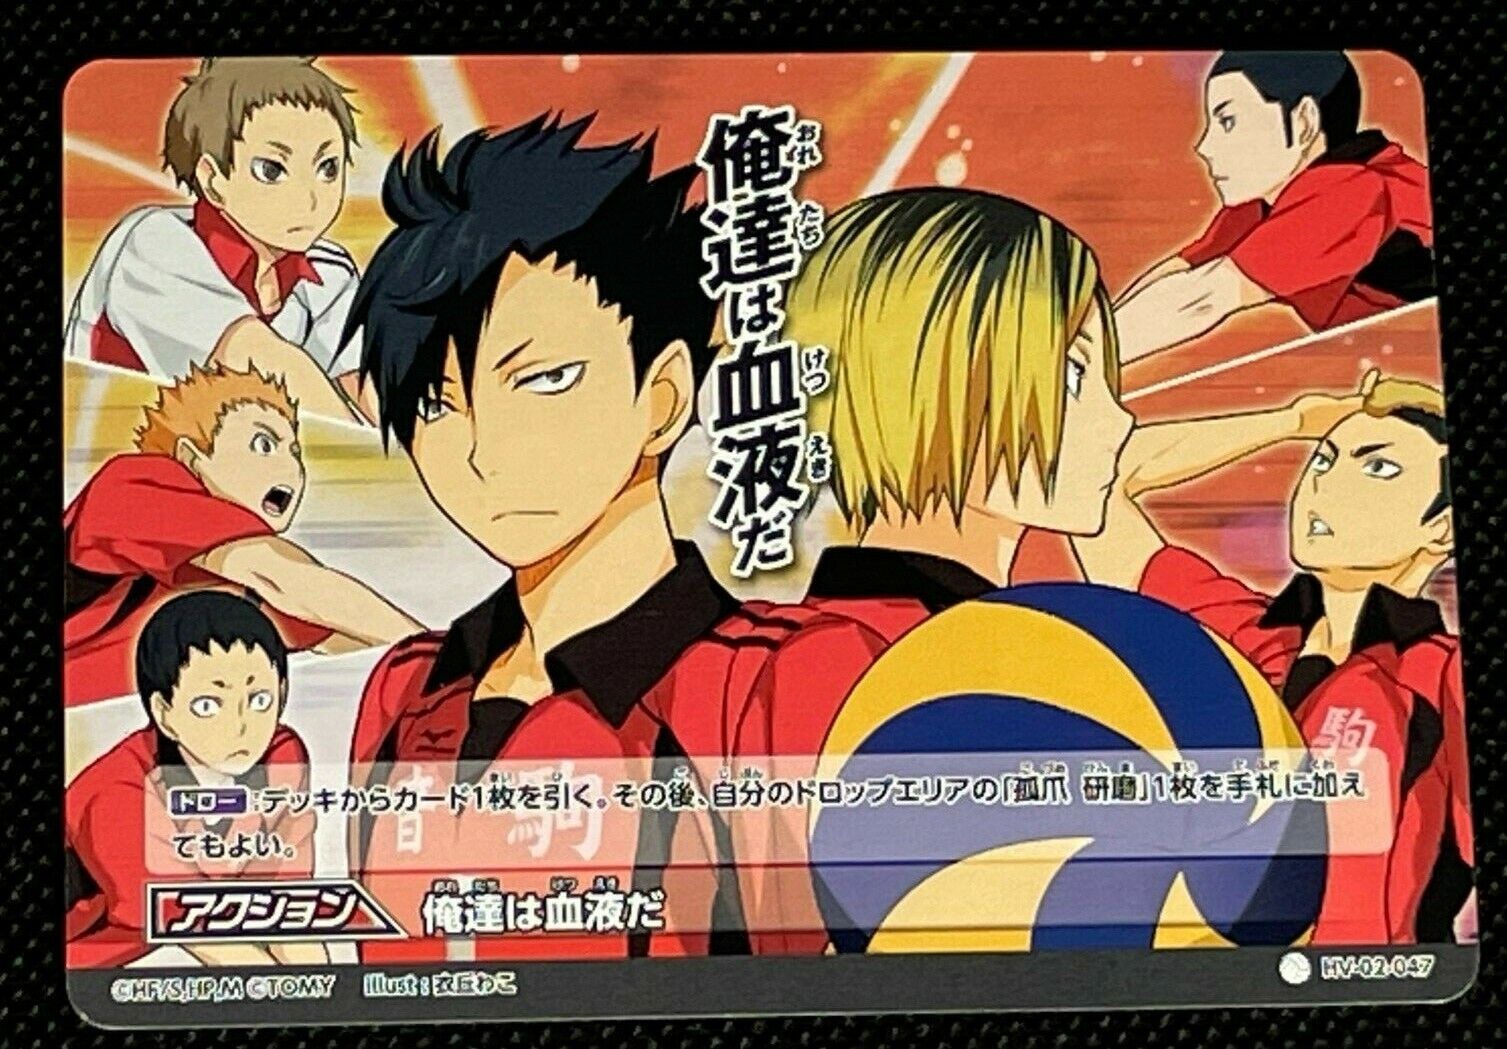 Haikyuu Trading Card Japanese High school Volleyball Anime Manga Shonen  Jump | eBay